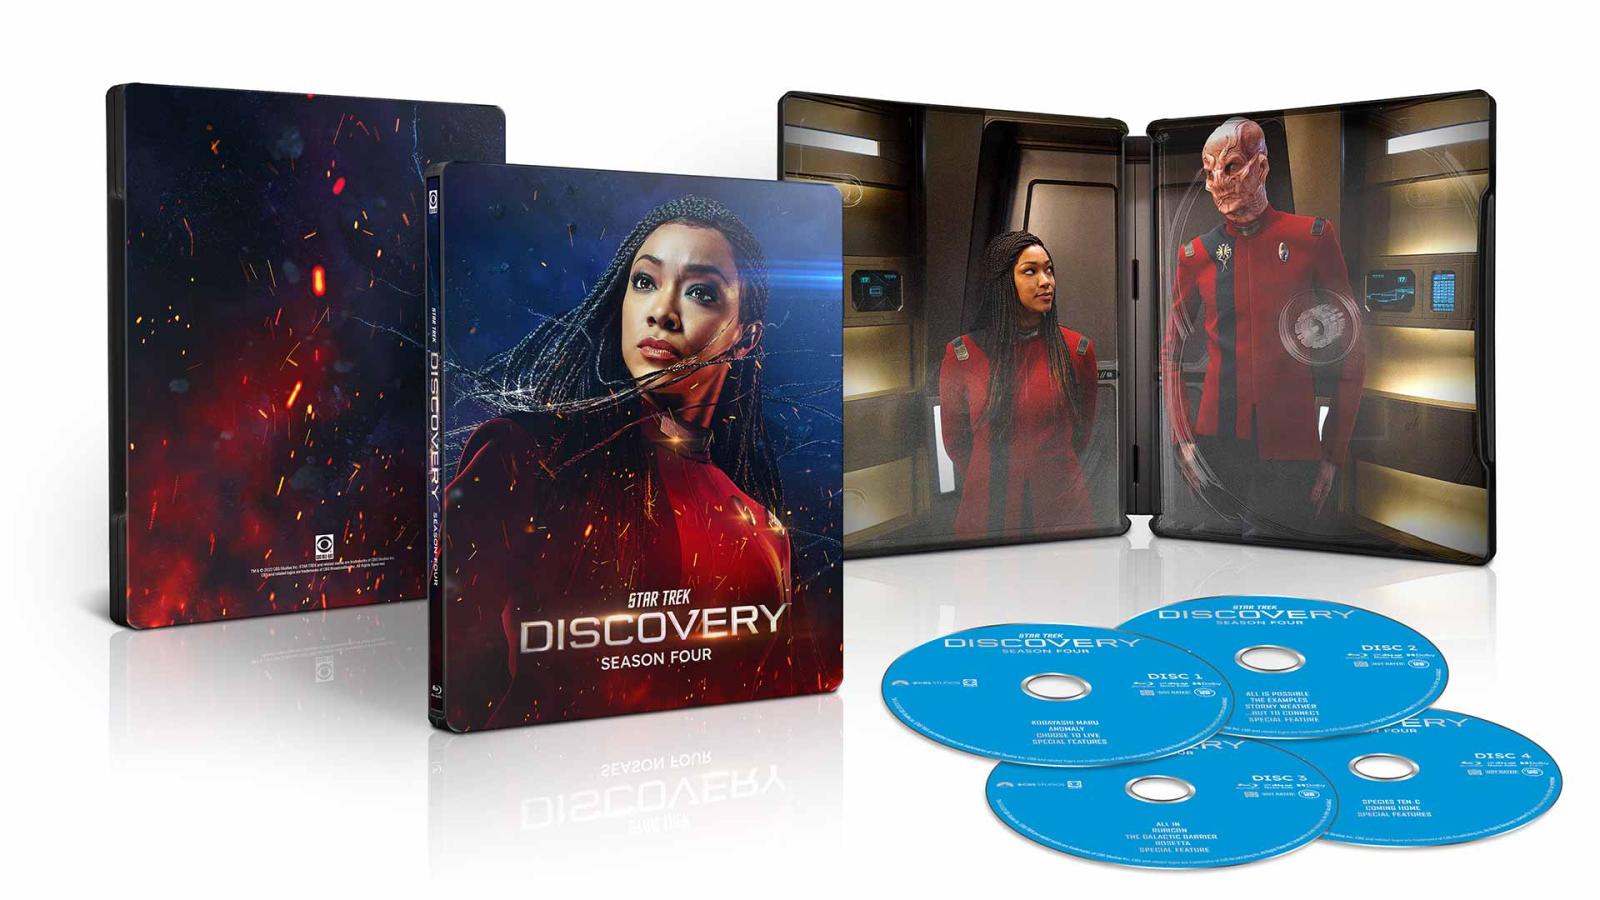 Star Trek: Discovery - Stagione 4 - Steelbook 4 Blu-ray - Serie TV Completa (Blu-ray) Image 2